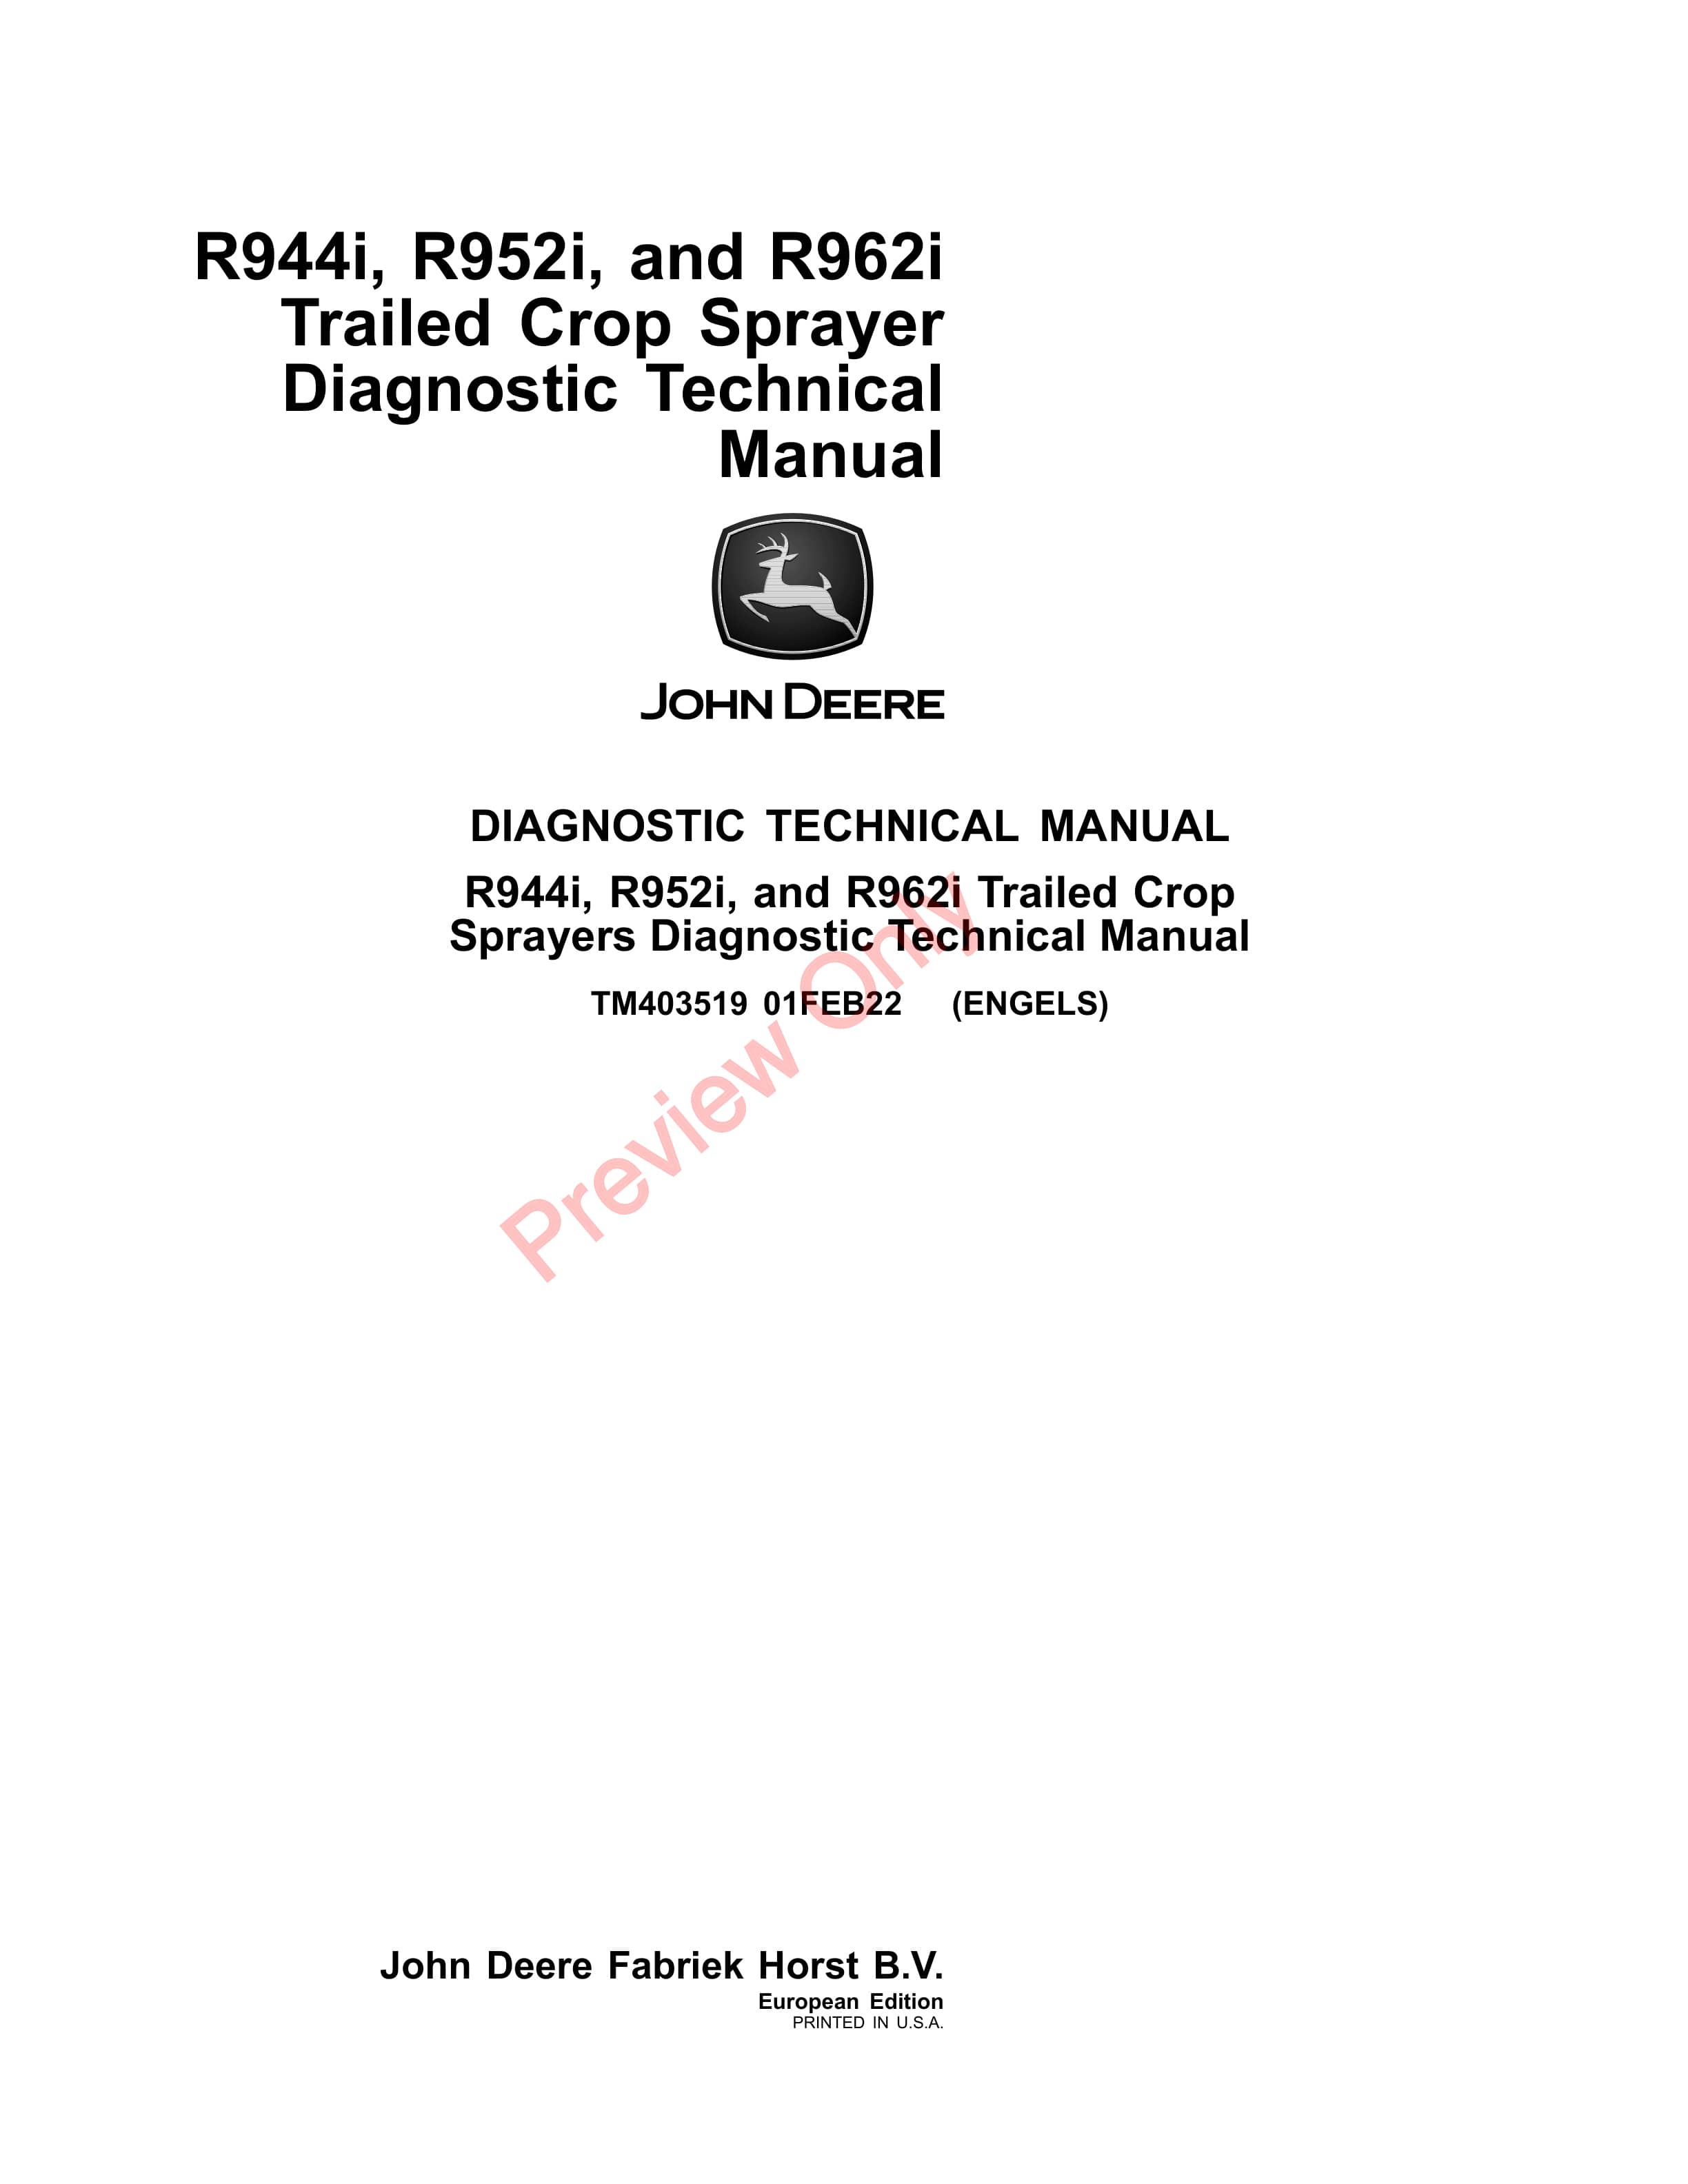 John Deere R944i, R952i, and R962i Trailed Crop Sprayer Diagnostic Technical Manual TM403519 01FEB22-1